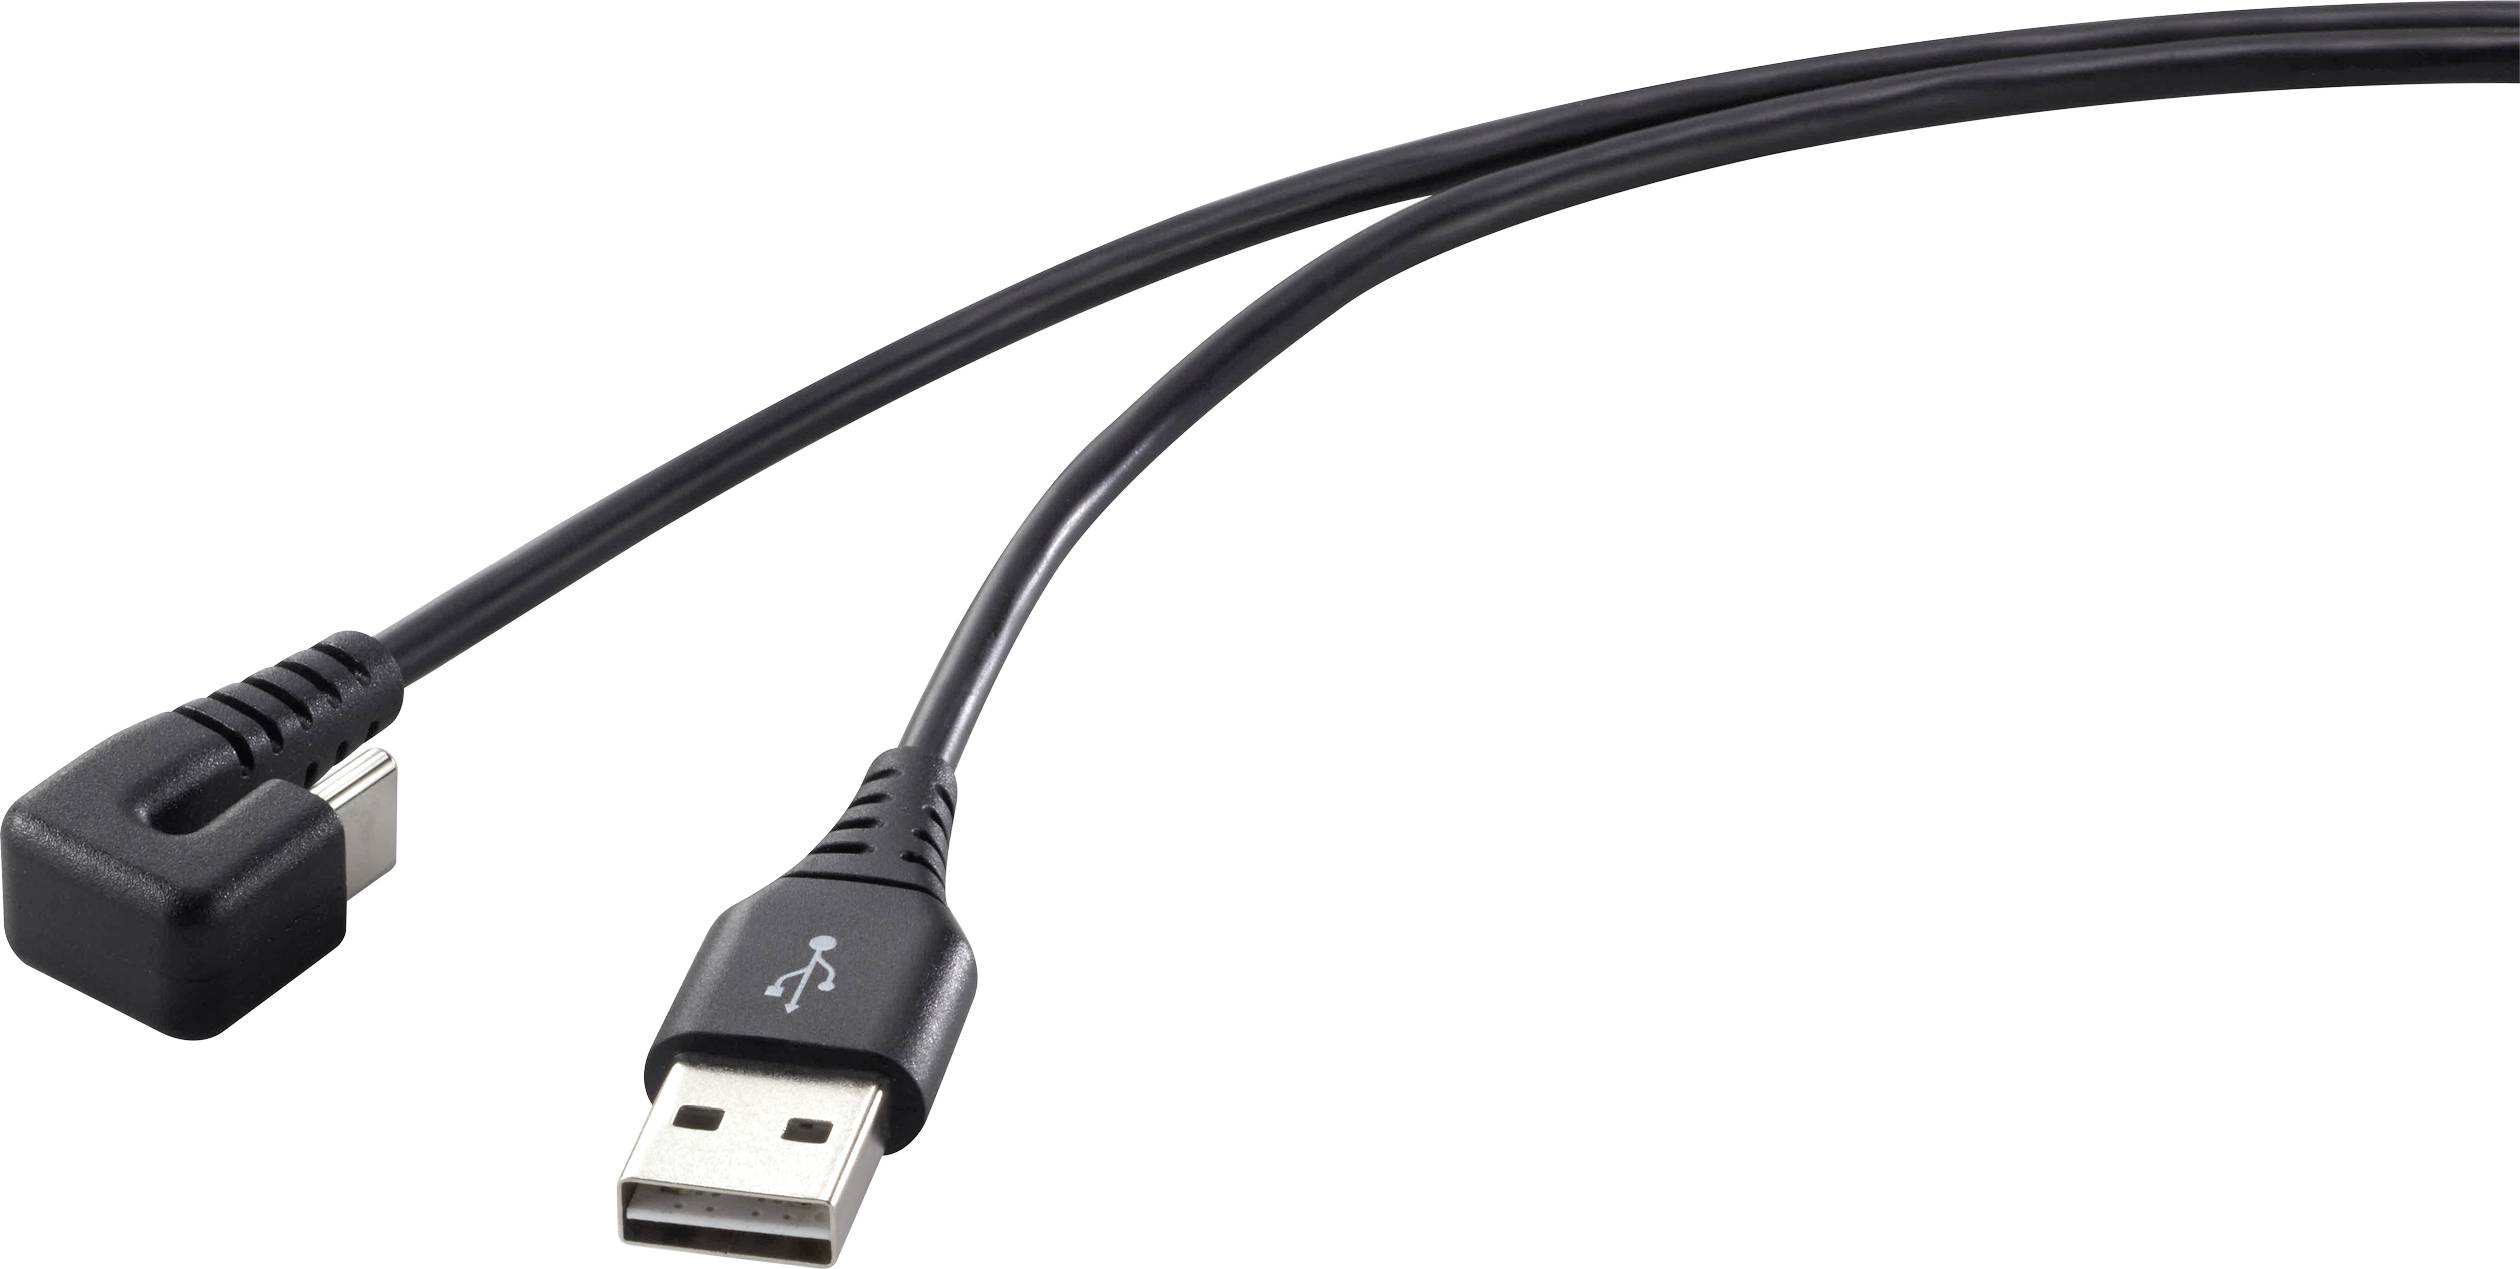 CONRAD Renkforce USB 2.0, Telefon (analog) Anschlusskabel [1x USB 2.0 Stecker A - 1x USB 2.0 Stecker